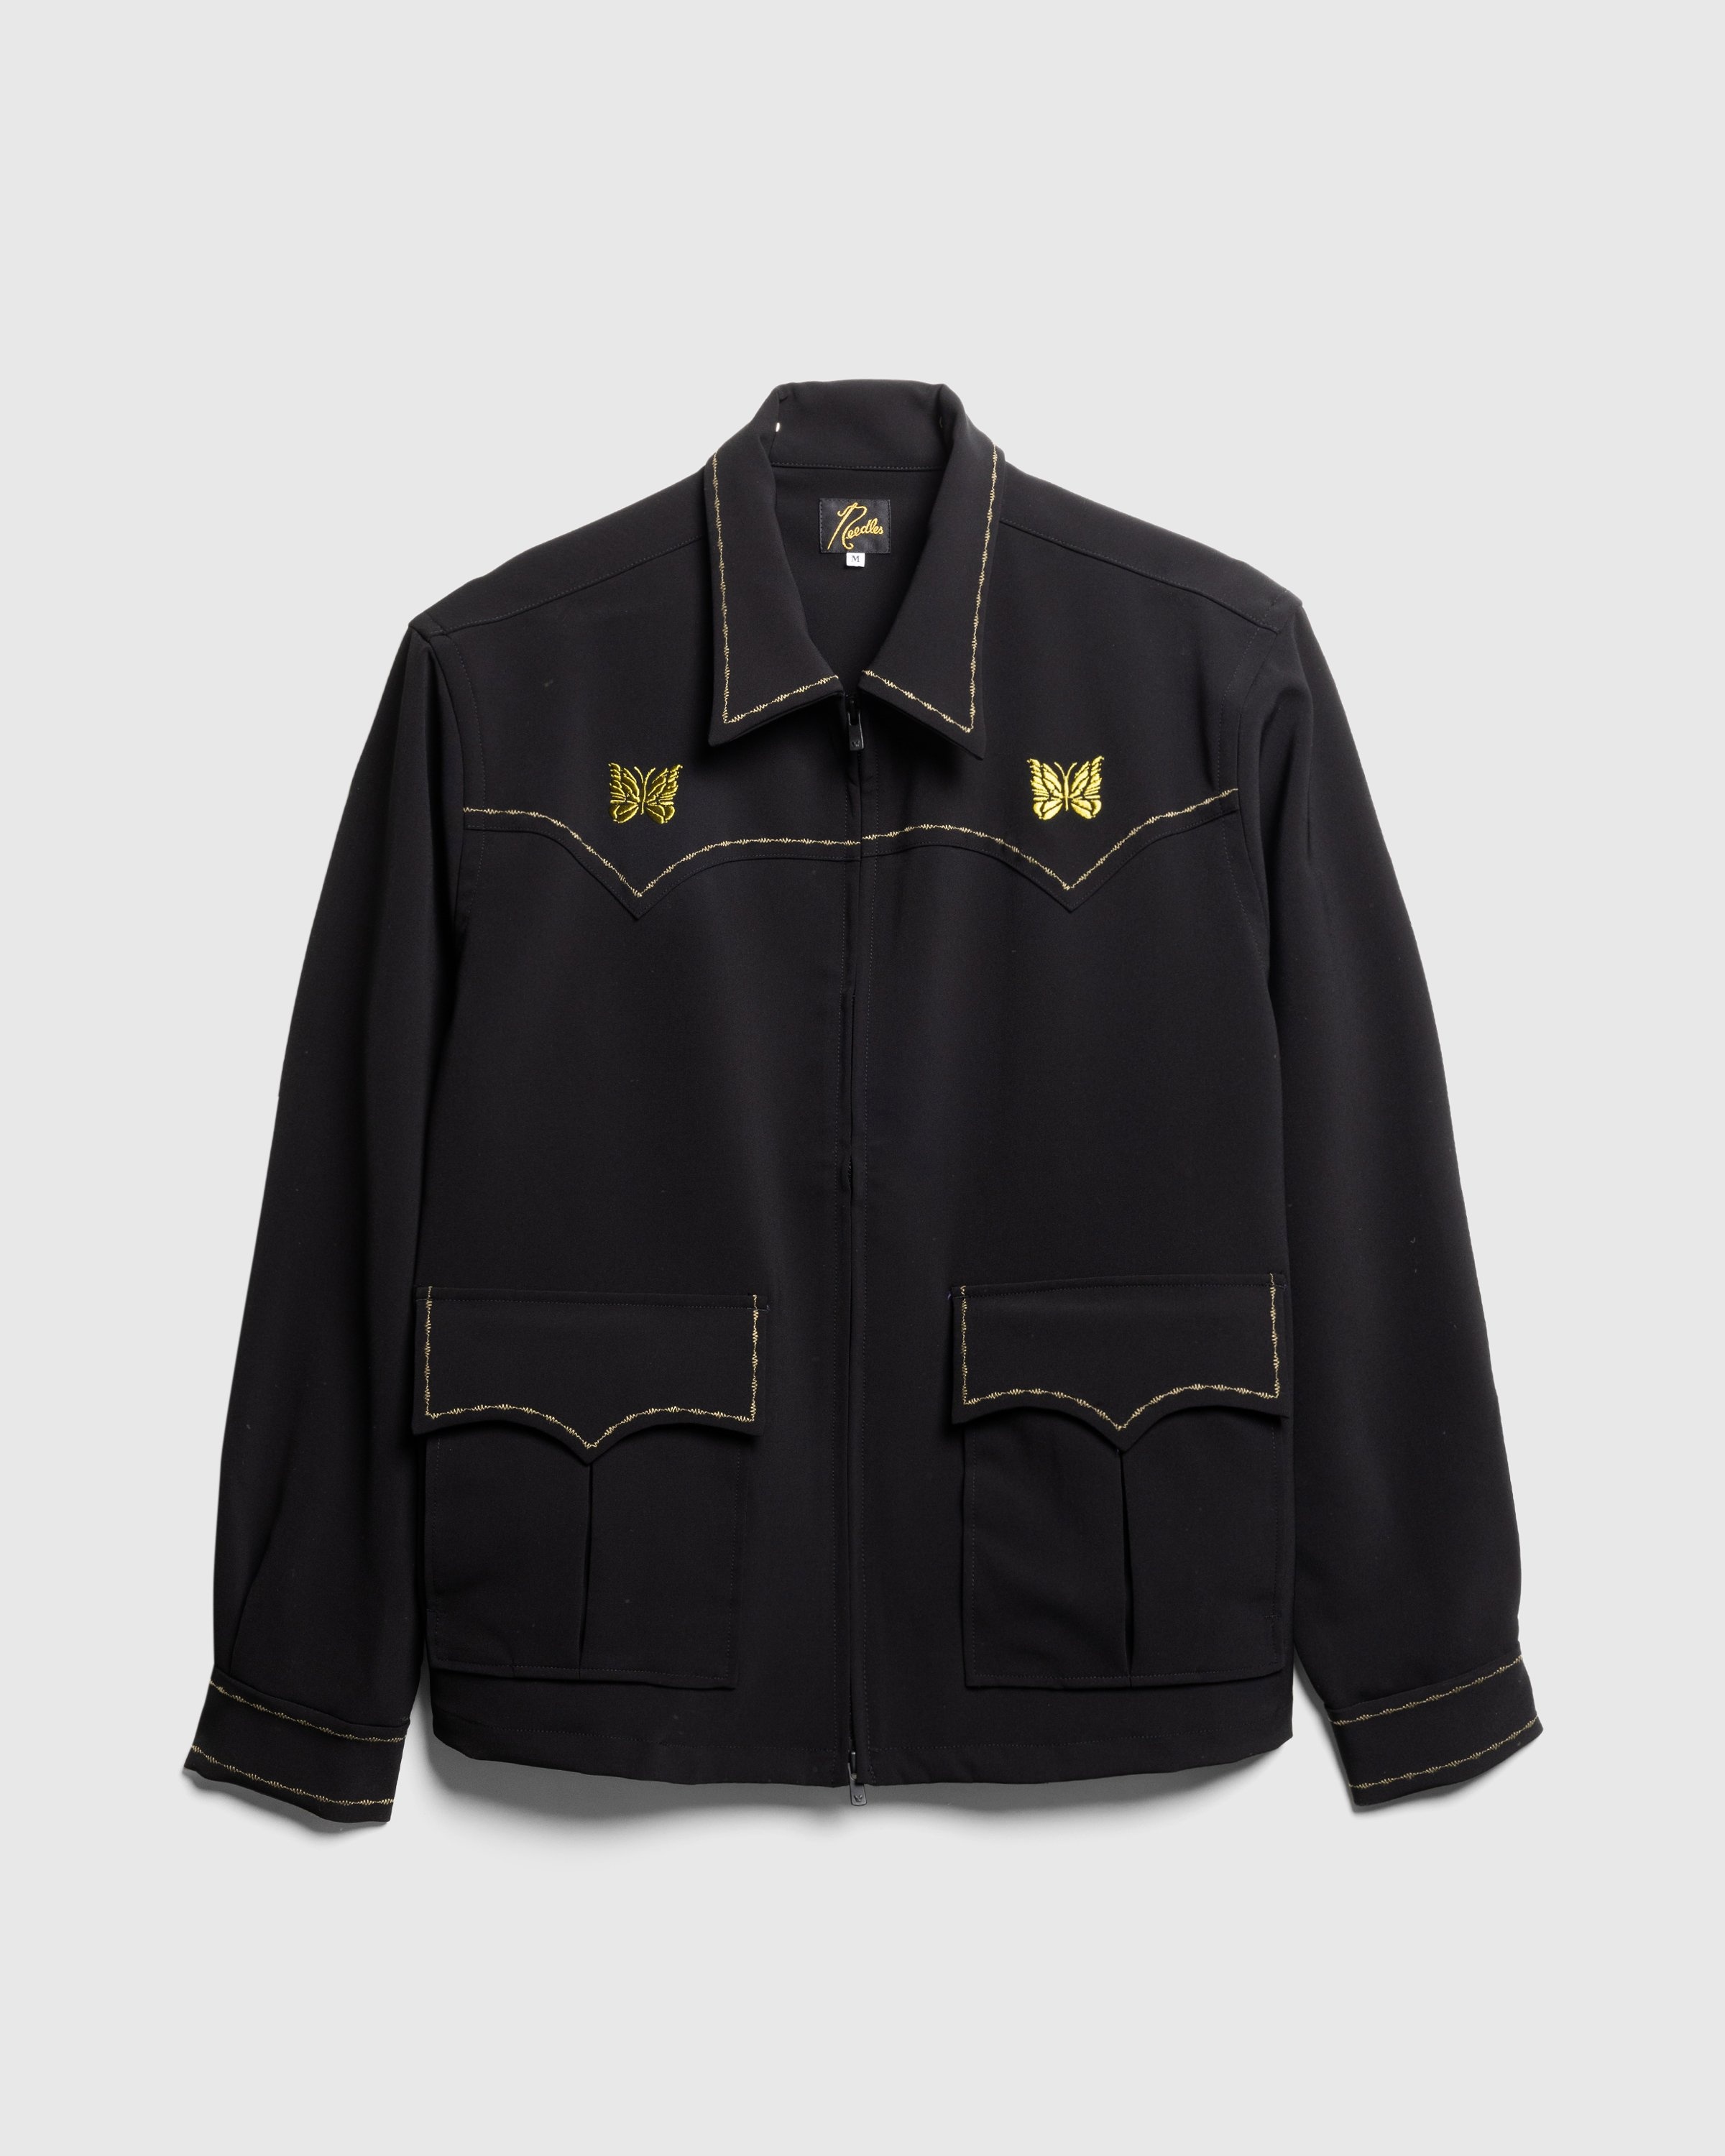 Needles – Double Cloth Western Sport Jacket Black | Highsnobiety Shop